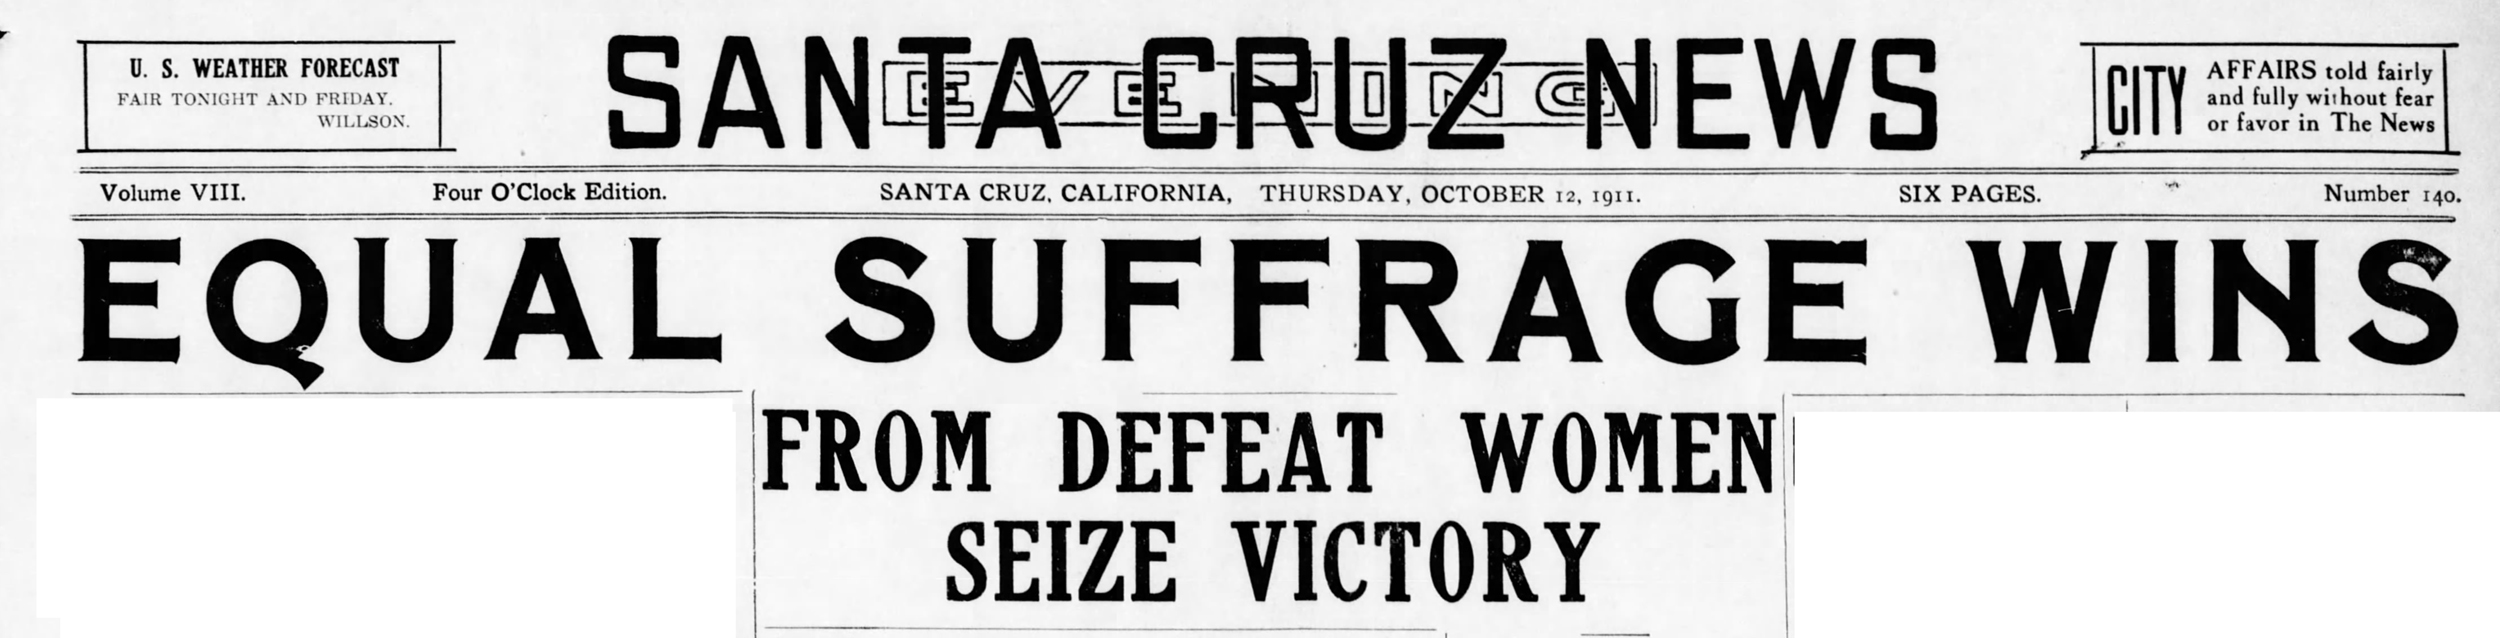 Equal Suffrage Wins Headline